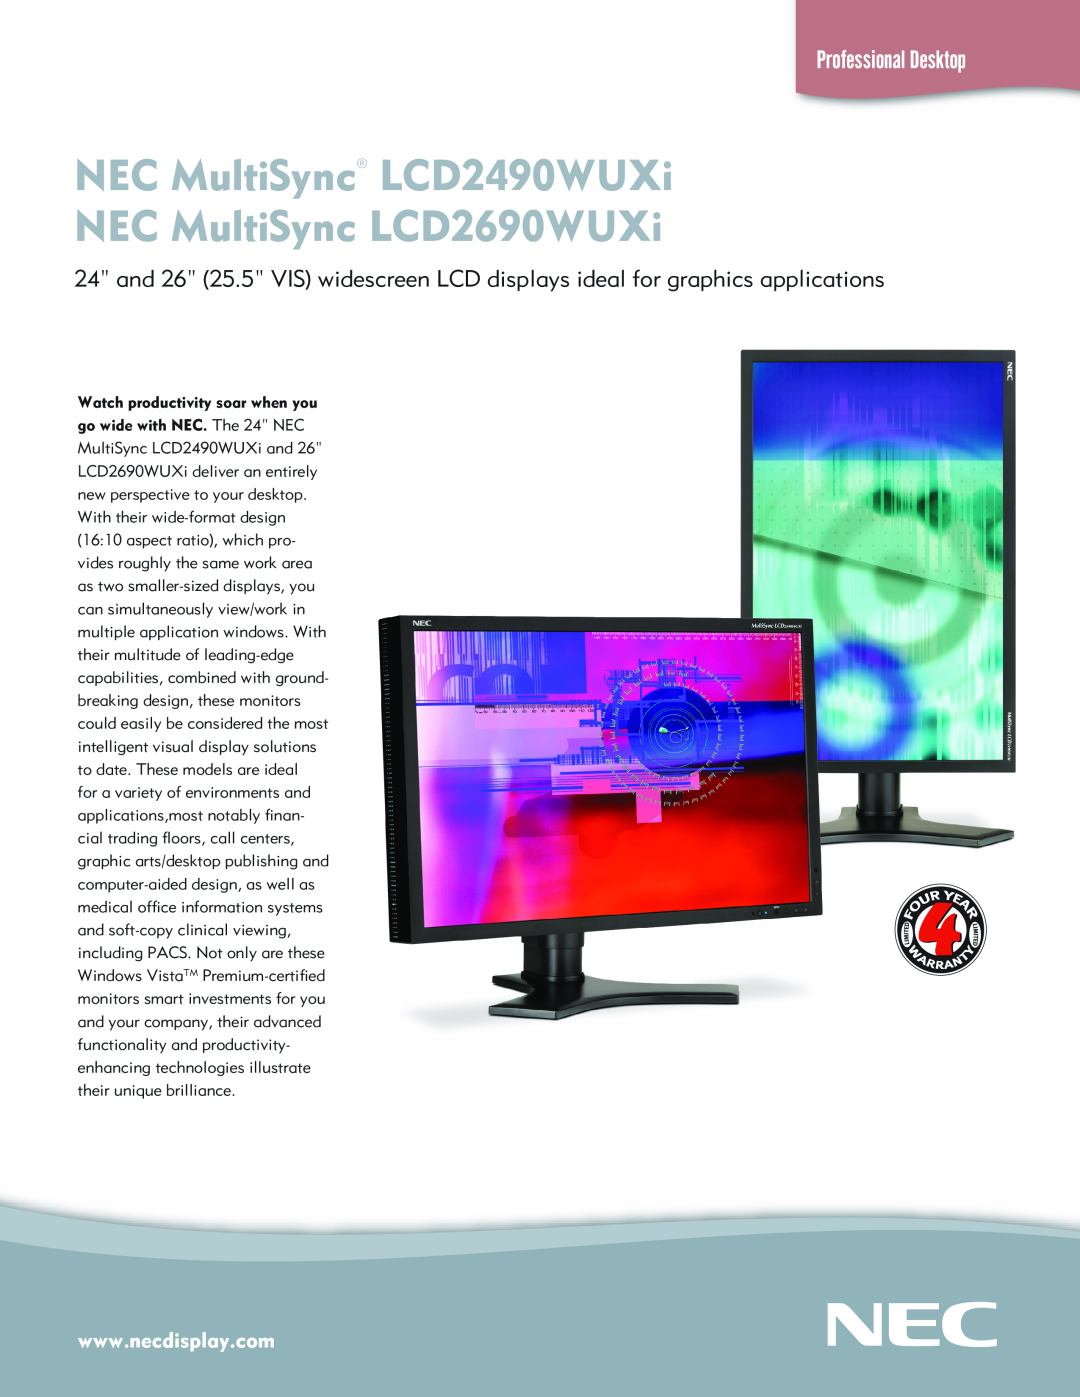 NEC manual NEC MultiSync LCD2490WUXi, NEC MultiSync LCD2690WUXi, Professional Desktop 